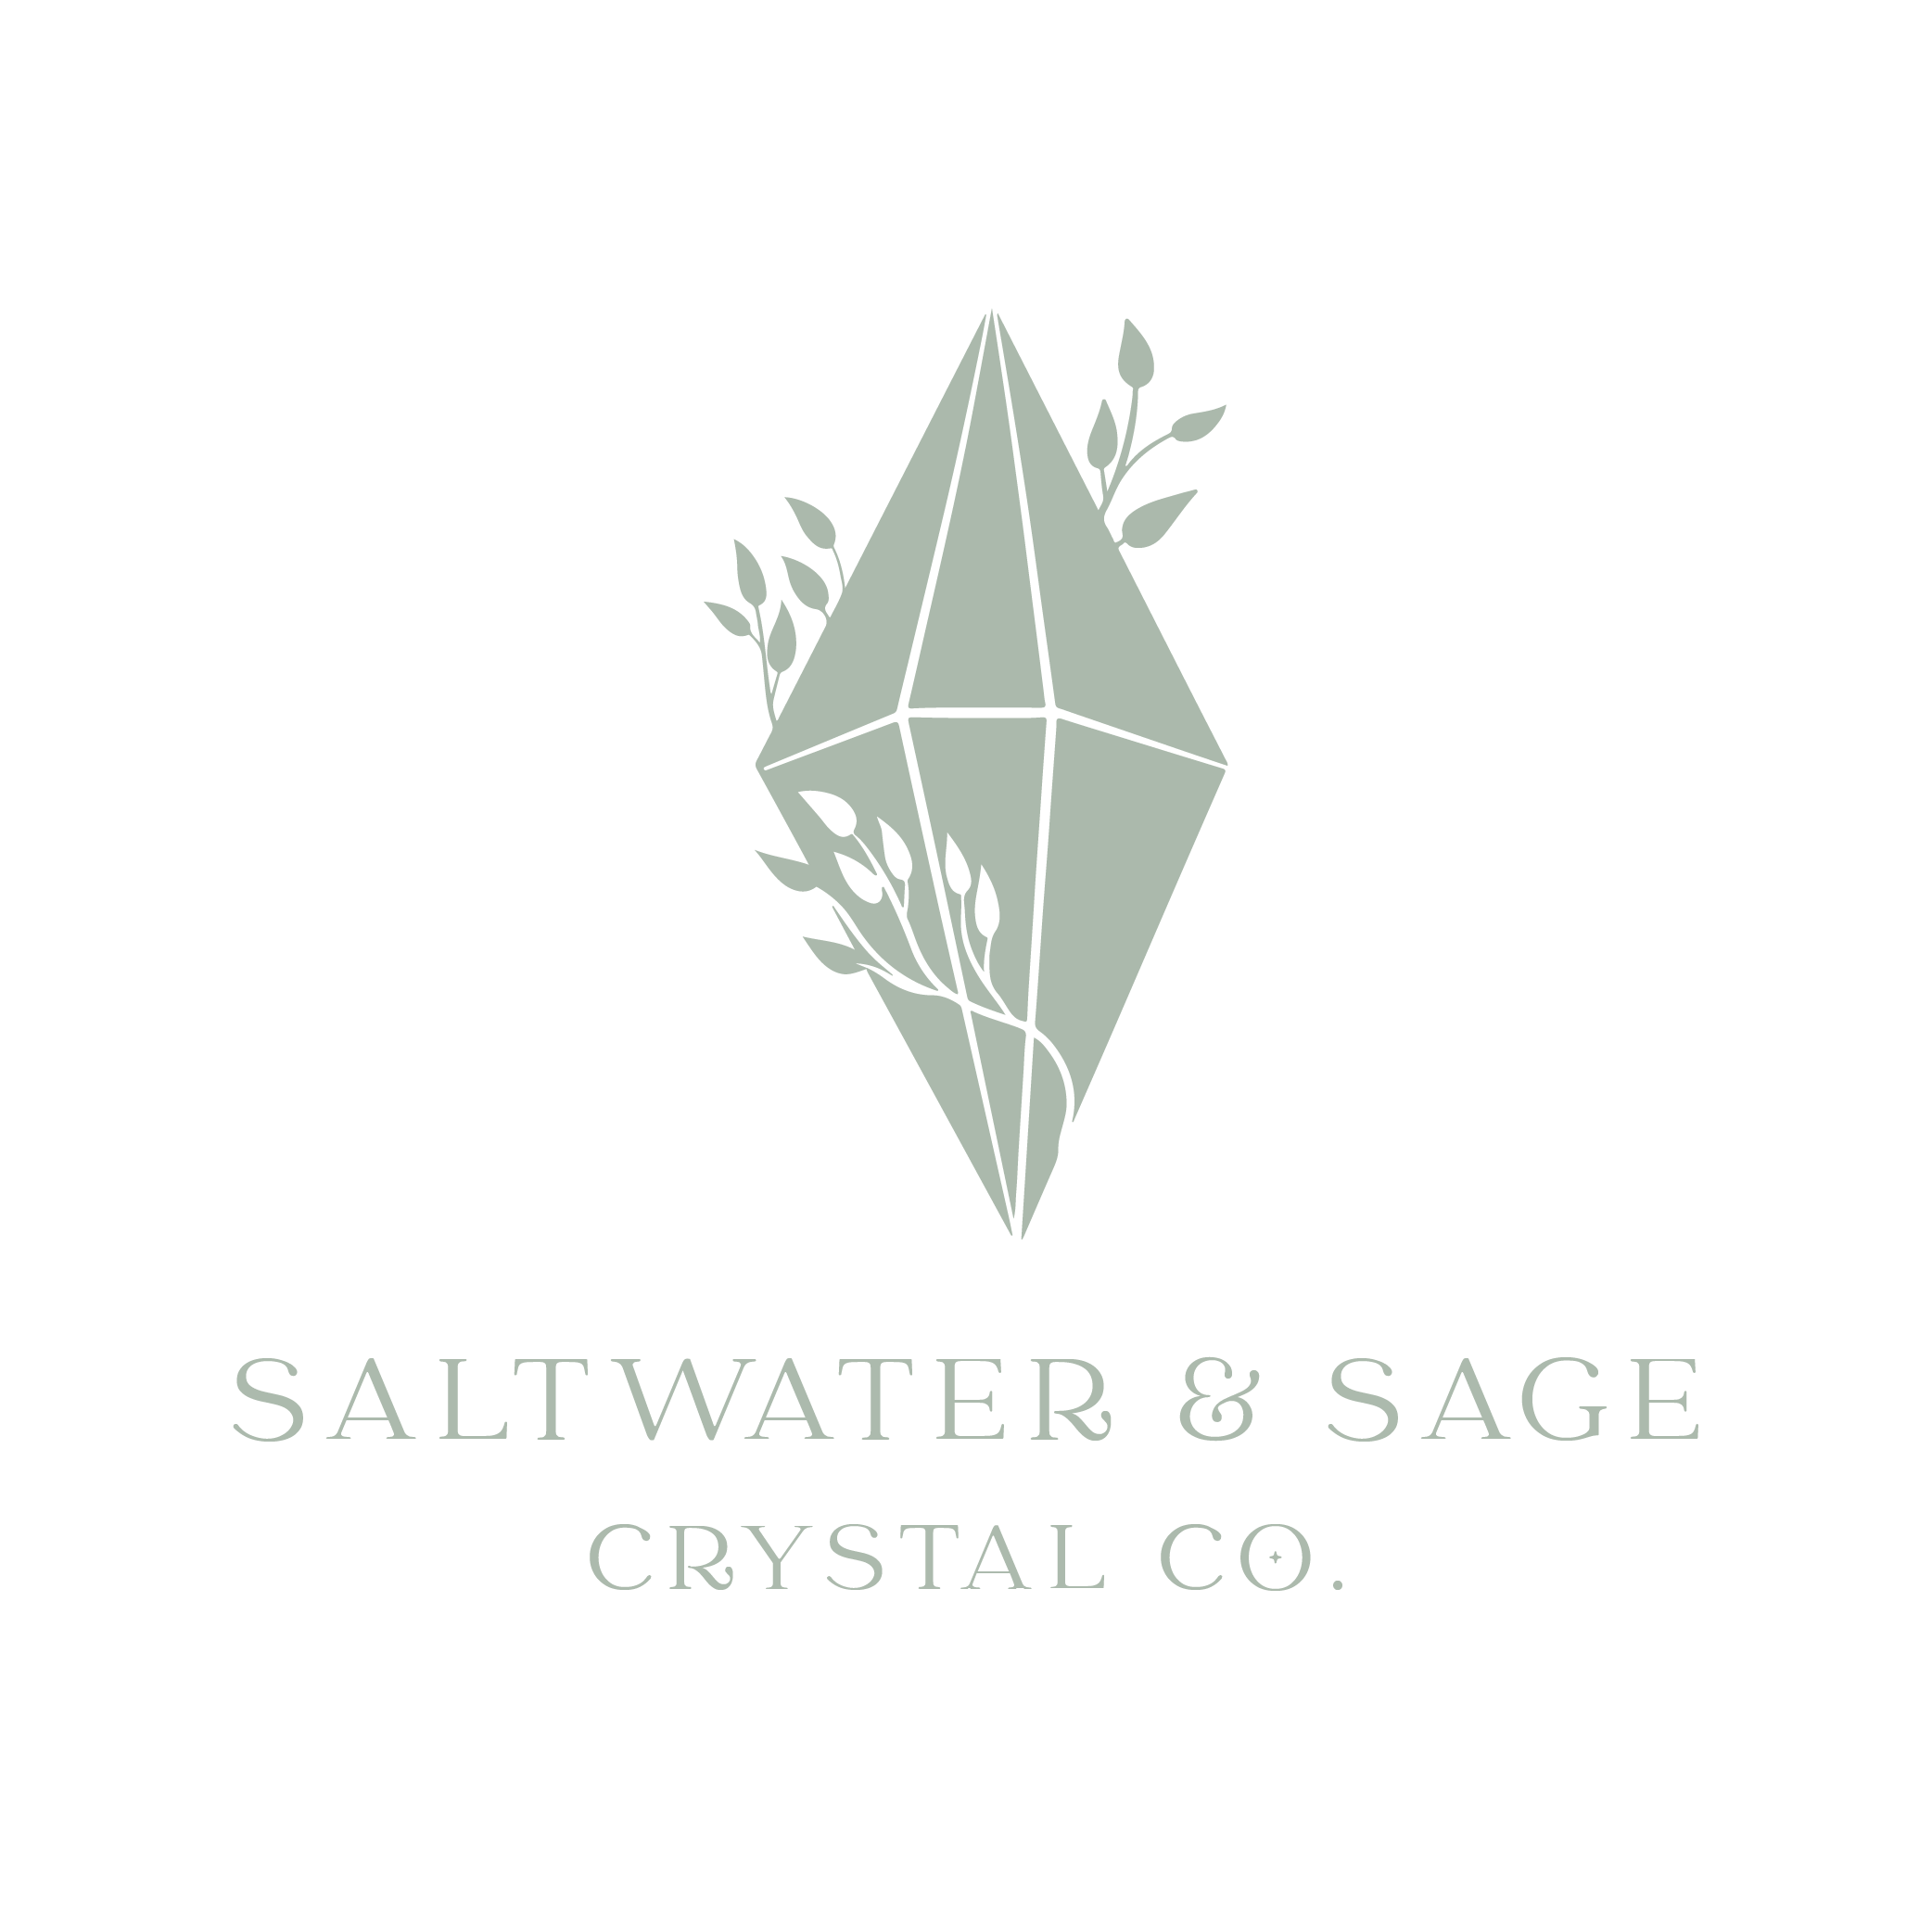 Saltwater & Sage Crystal Co.